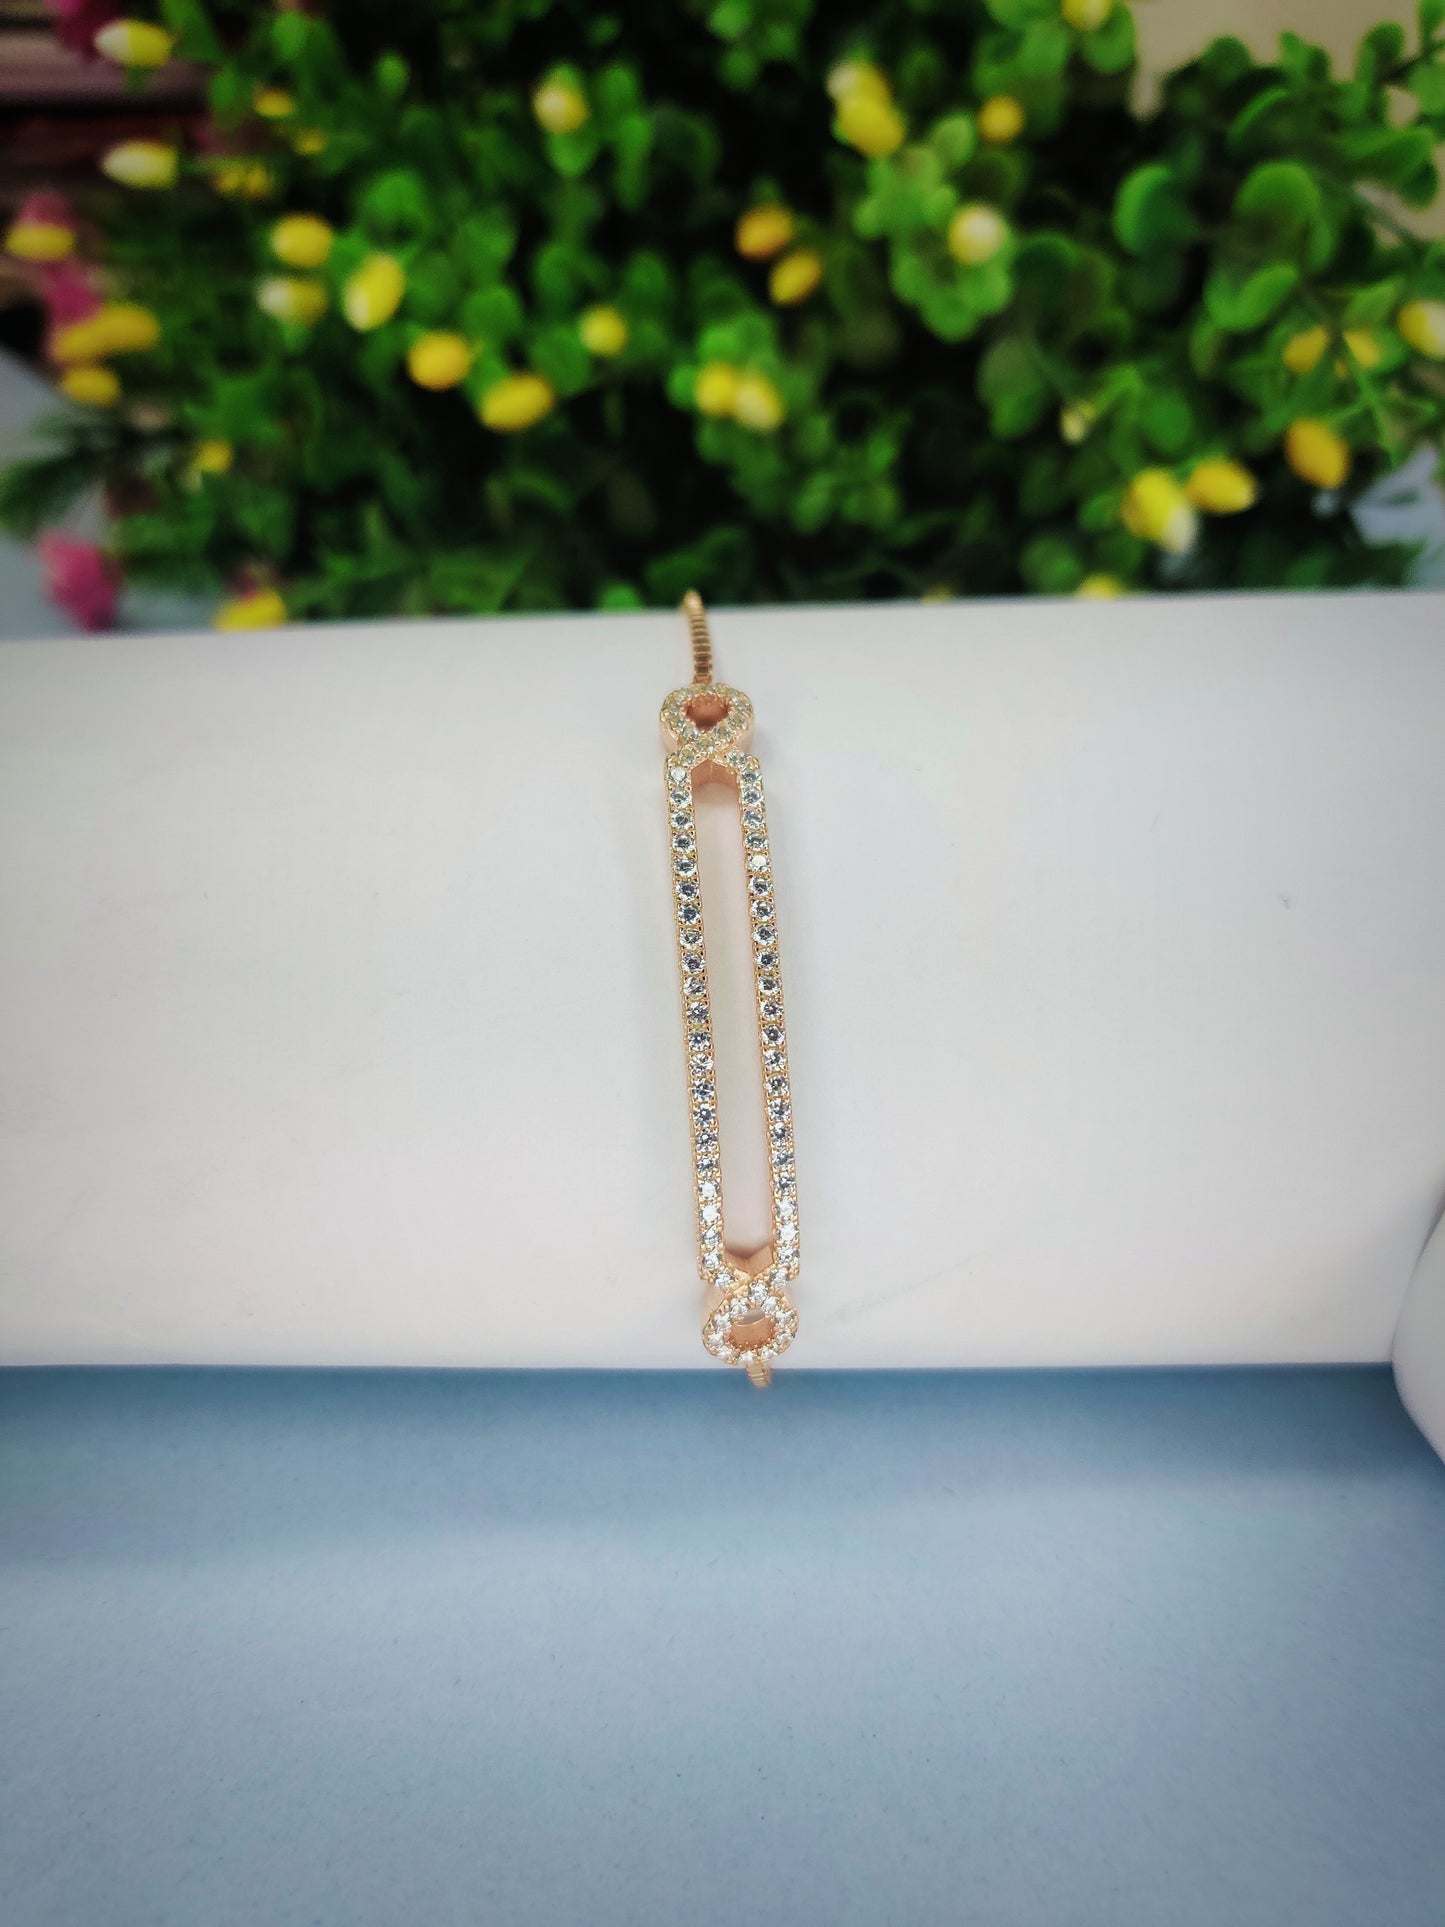 Diamond Studded Rose Gold Bracelet Made With Sterling Silver 925